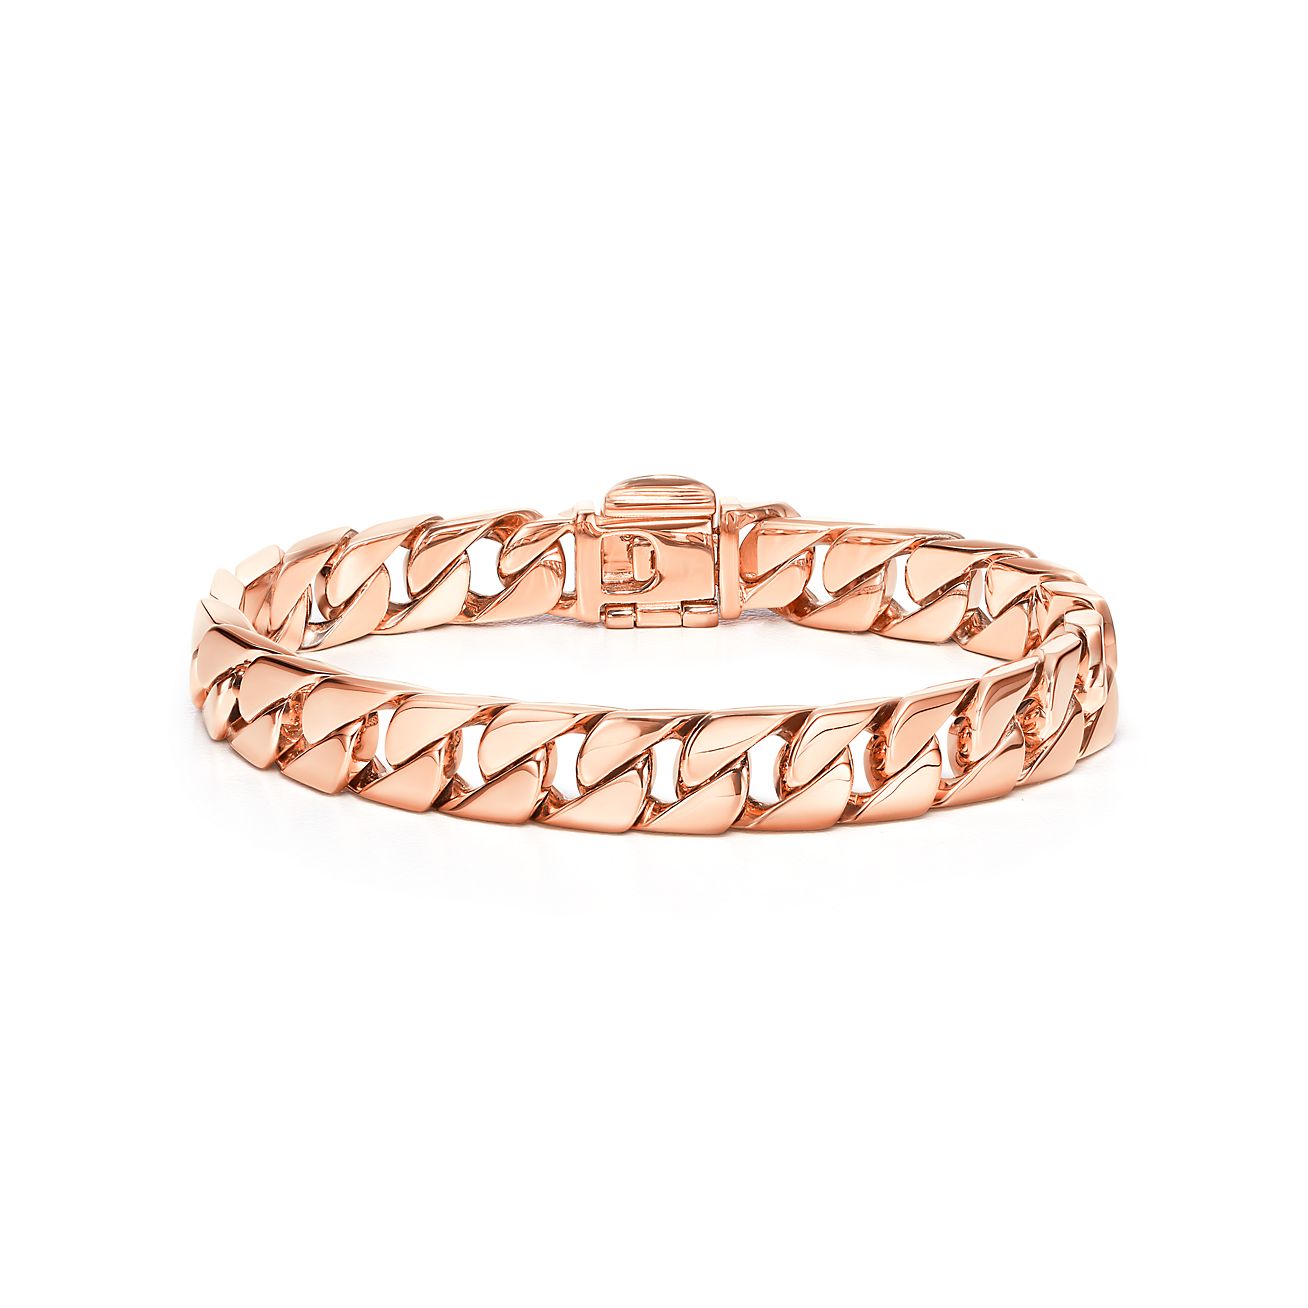 Curb link chain bracelet in 18k rose 